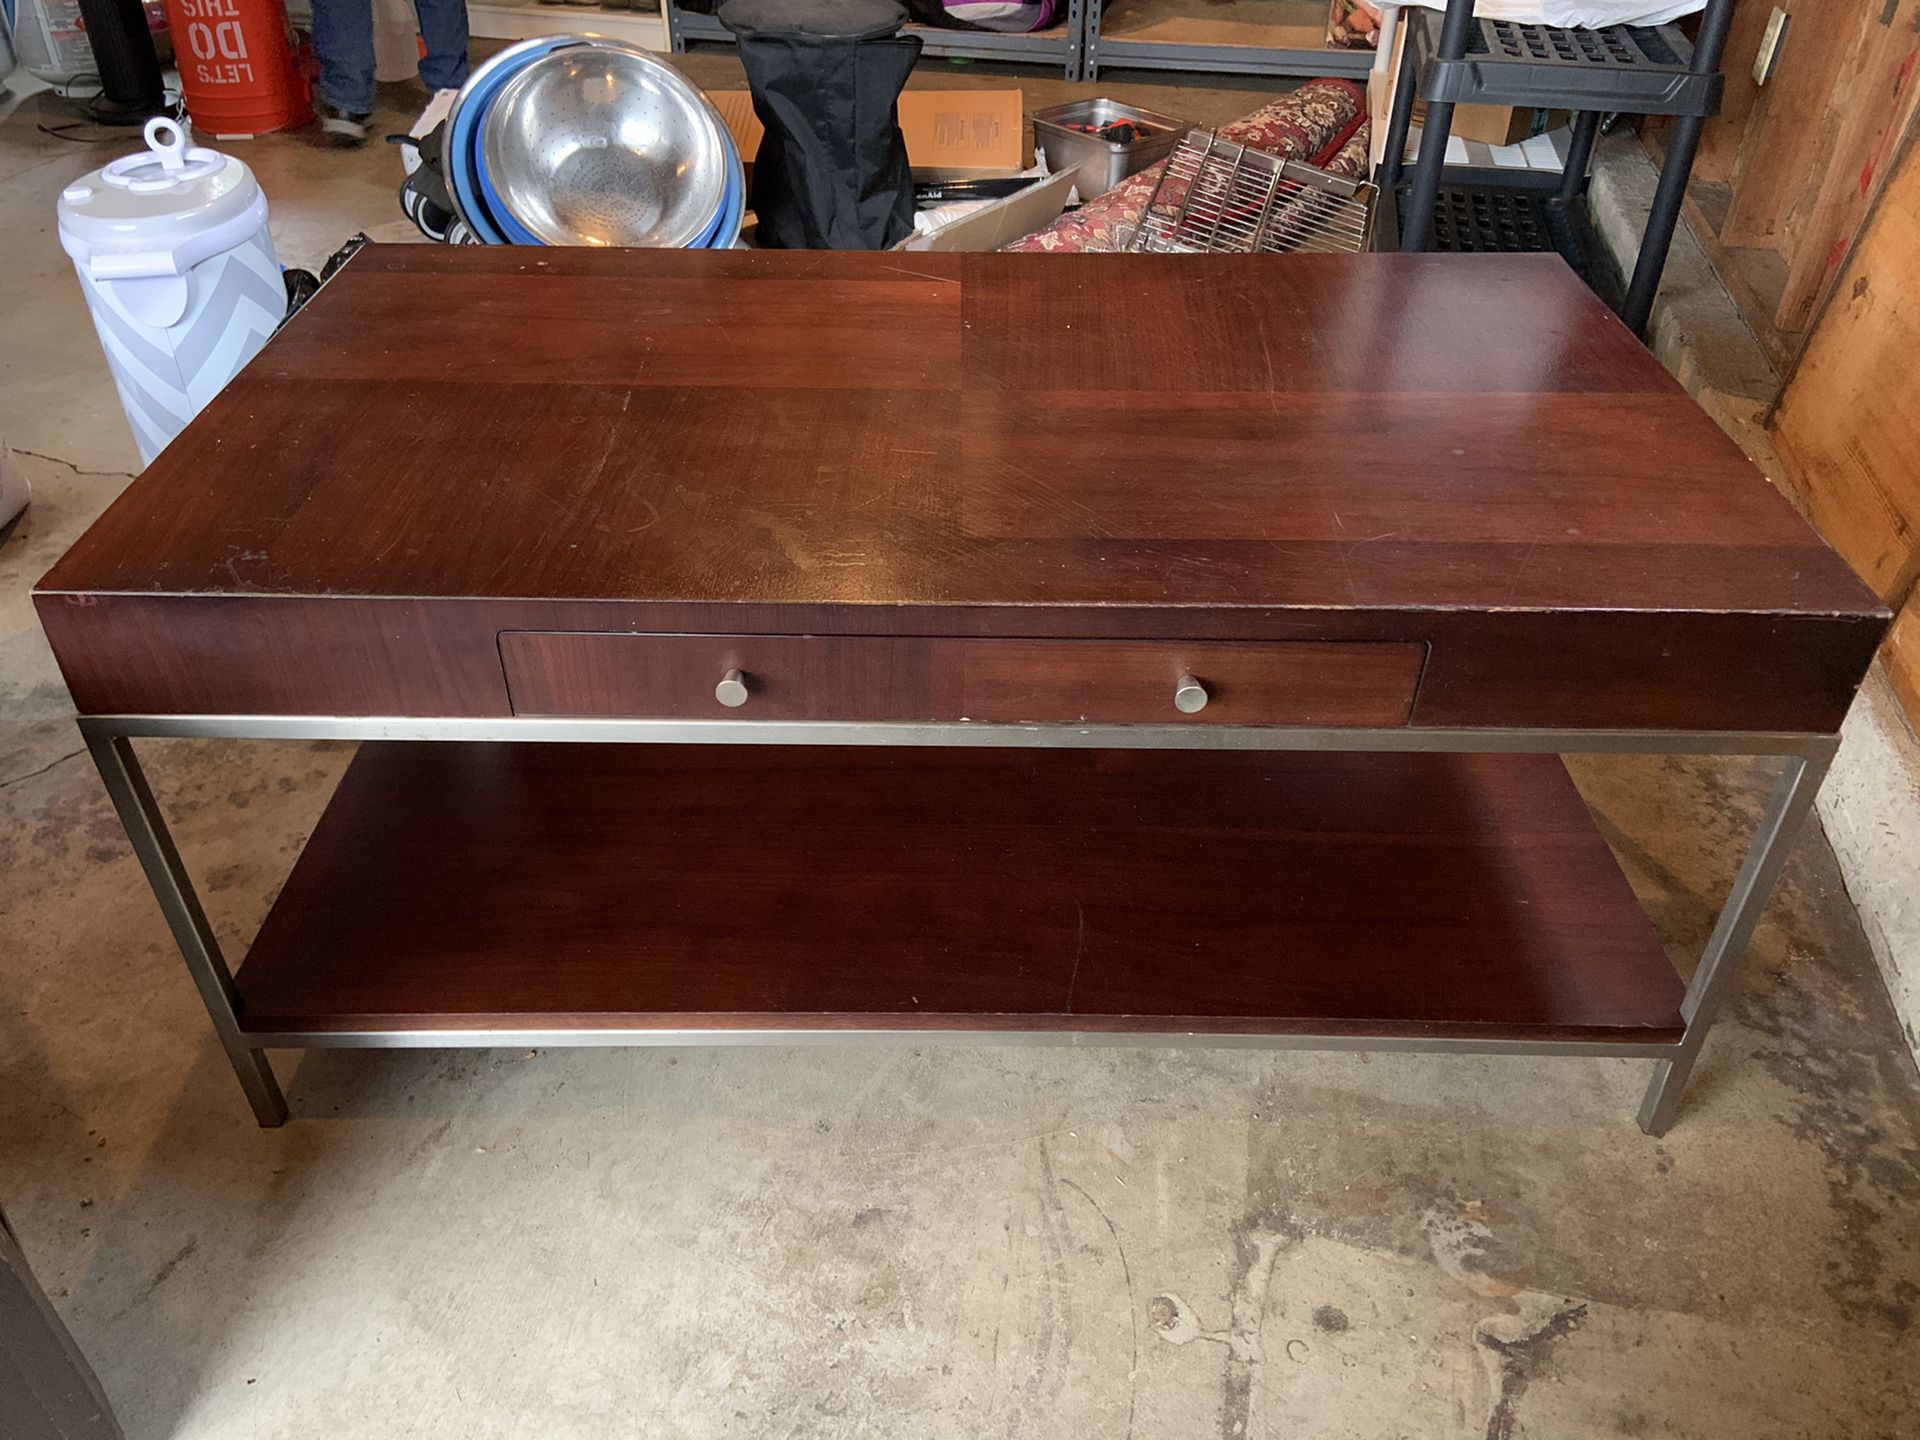 Coffee Table / Wood